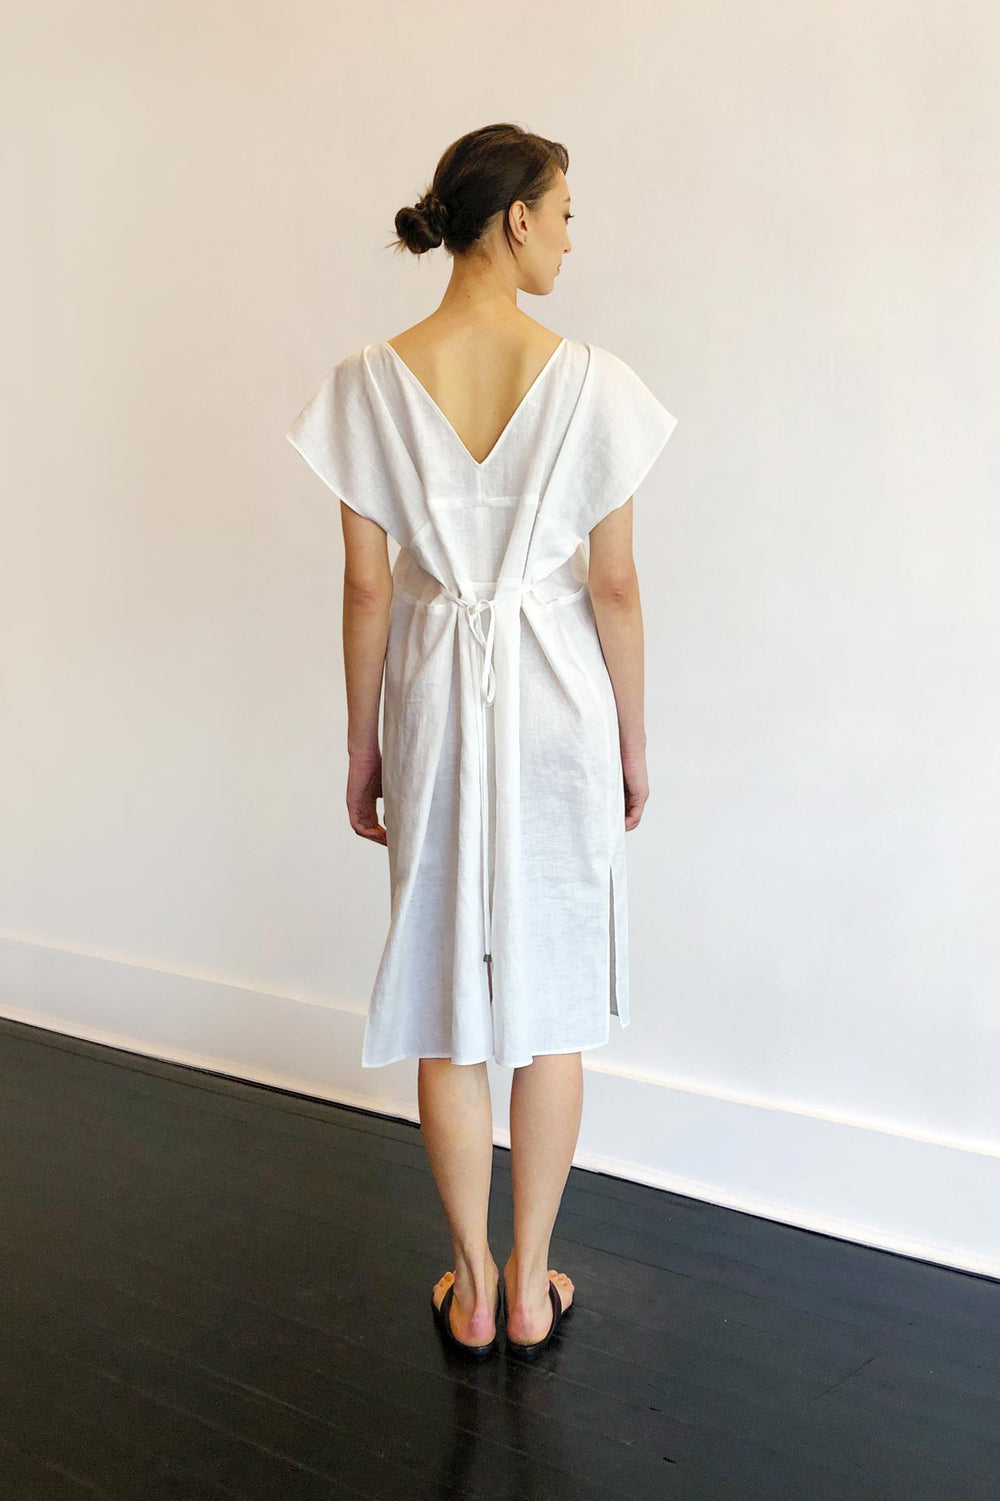 Fashion Designer CARL KAPP collection | Lisa Onesize Fits All White Linen dress | Sydney Australia